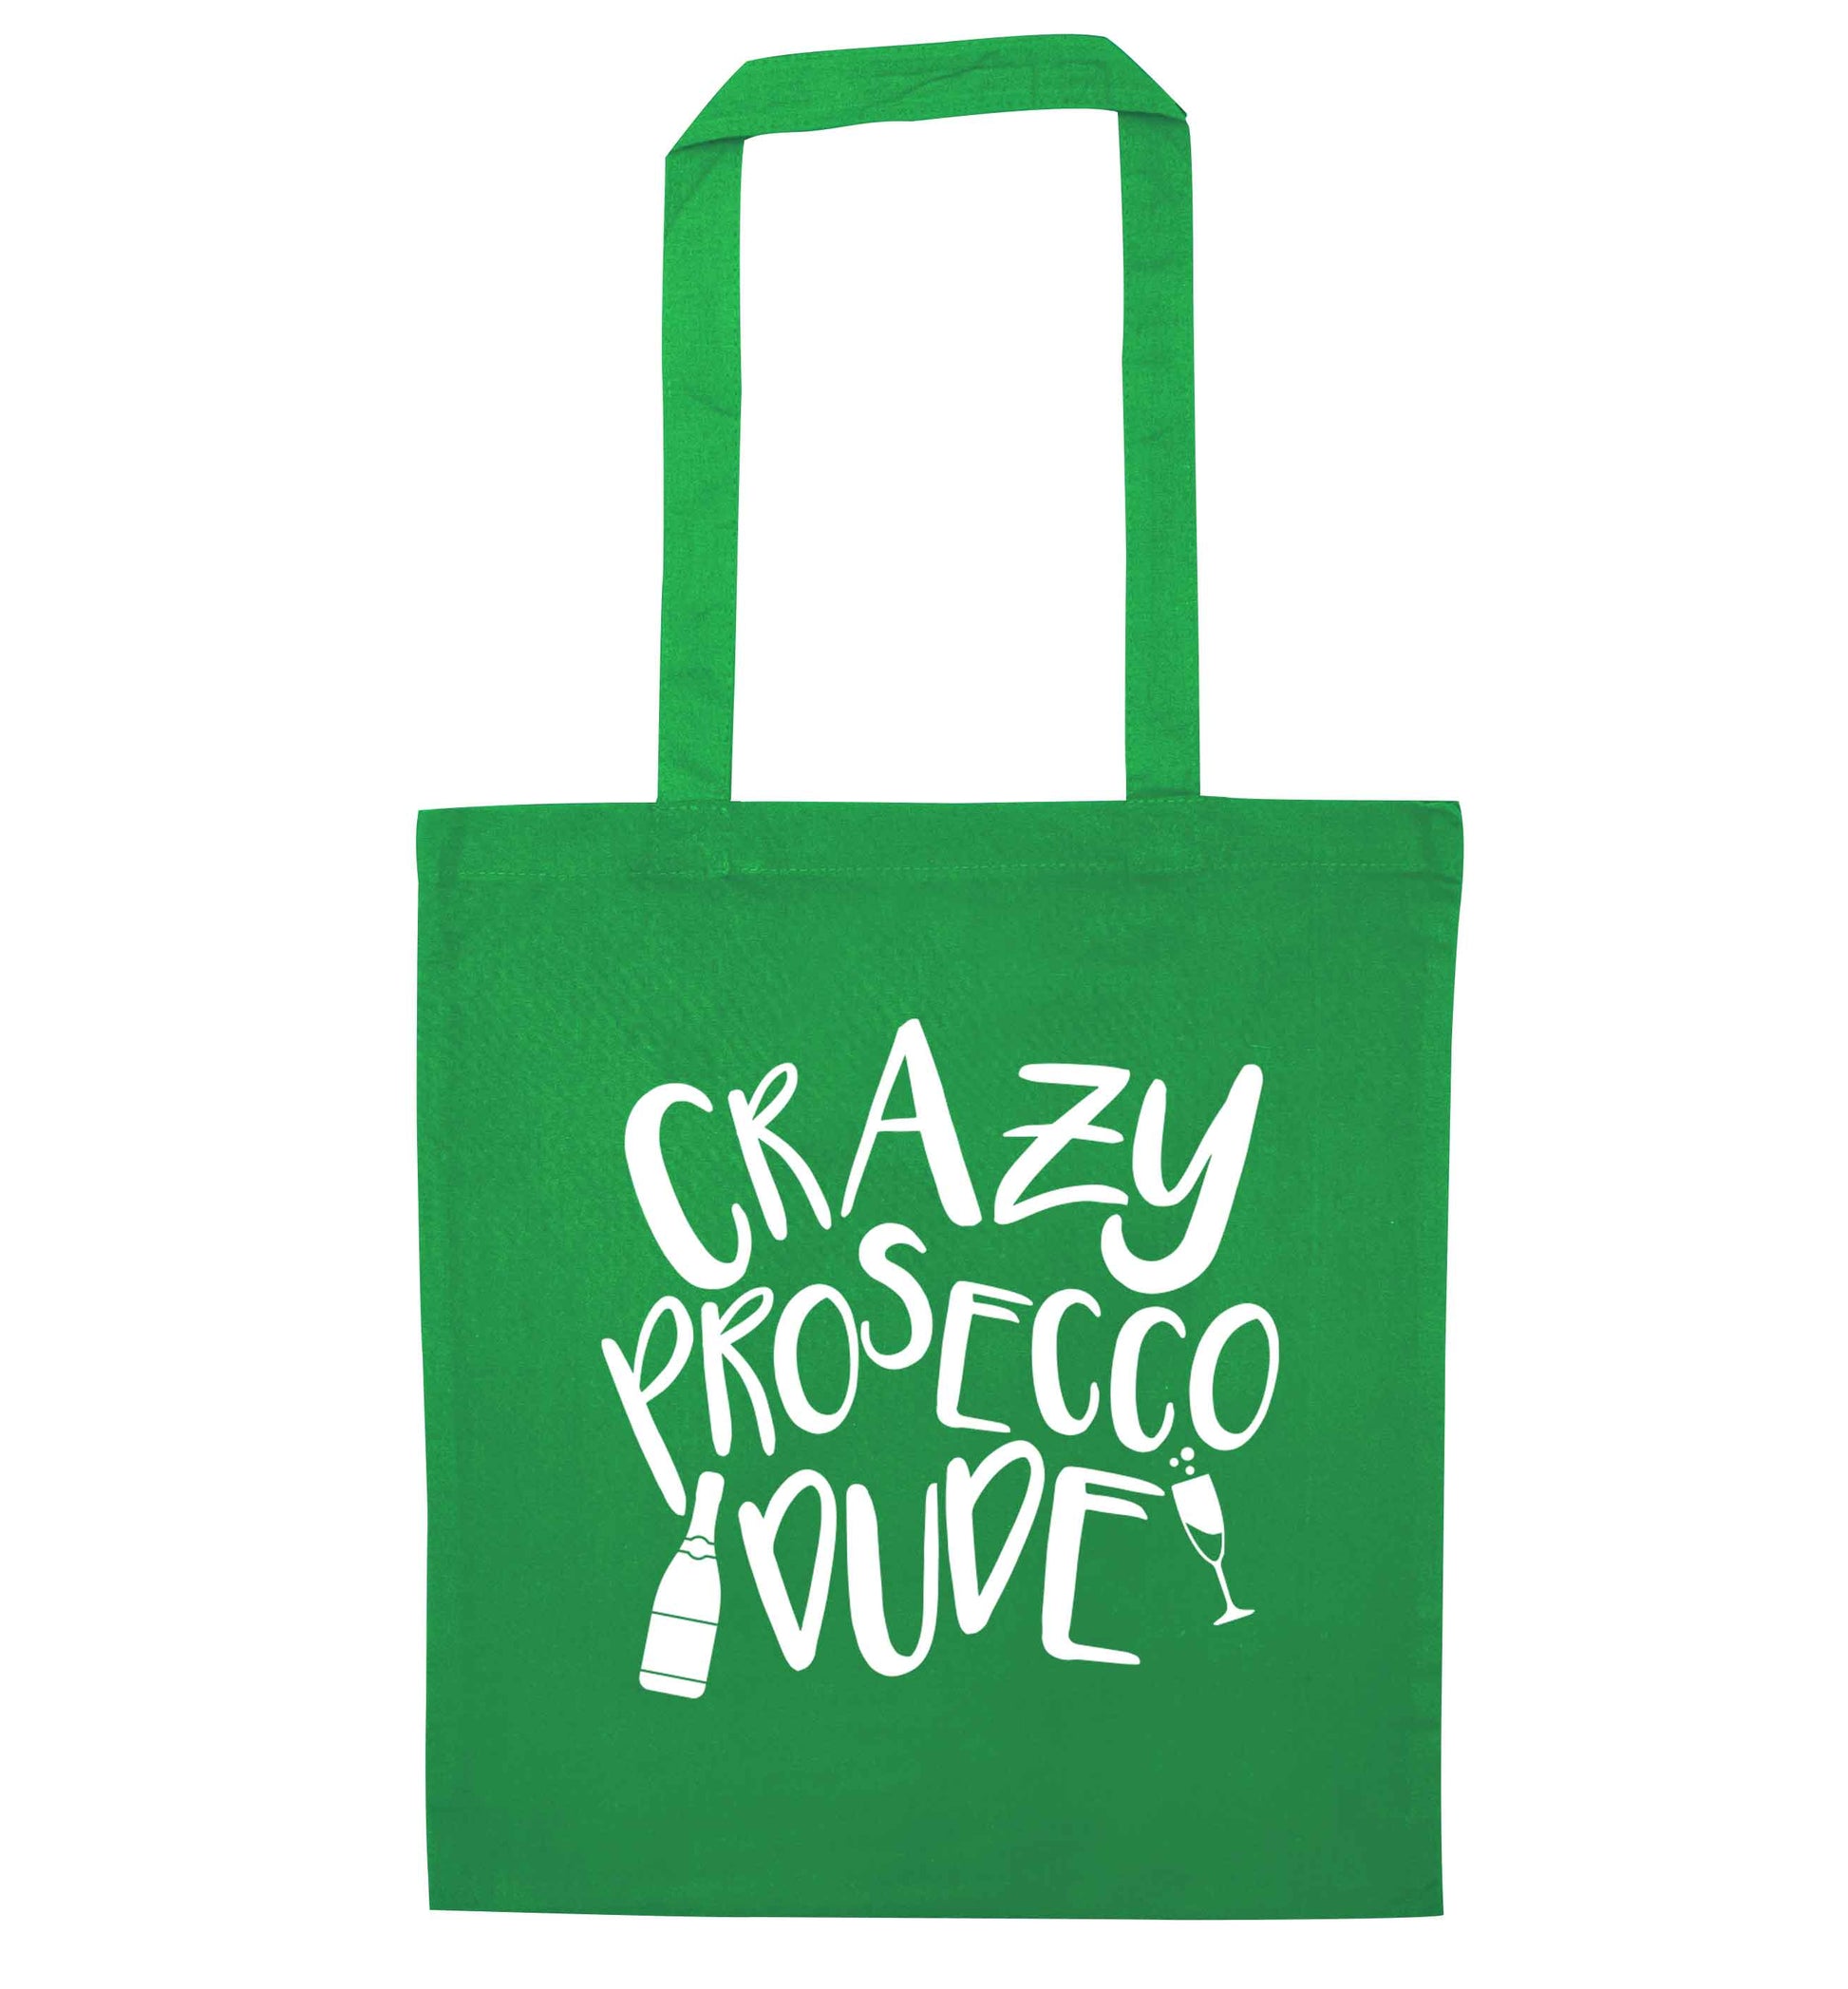 Crazy prosecco dude green tote bag